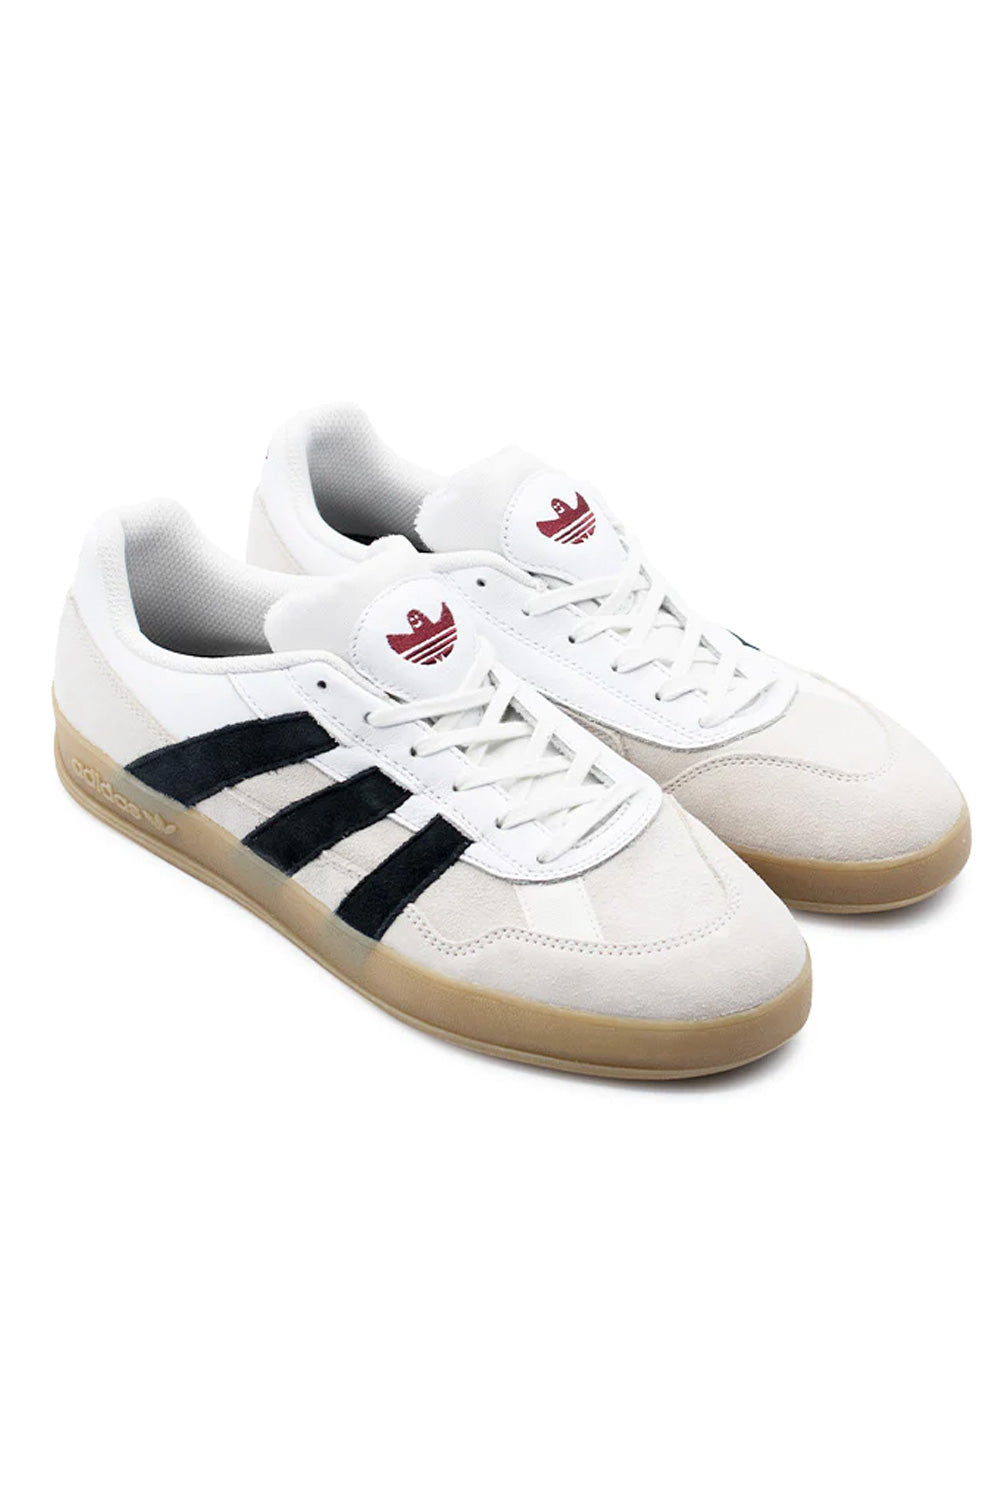 Adidas Aloha Super Shoe Flat White / Core Black / Gum - BONKERS